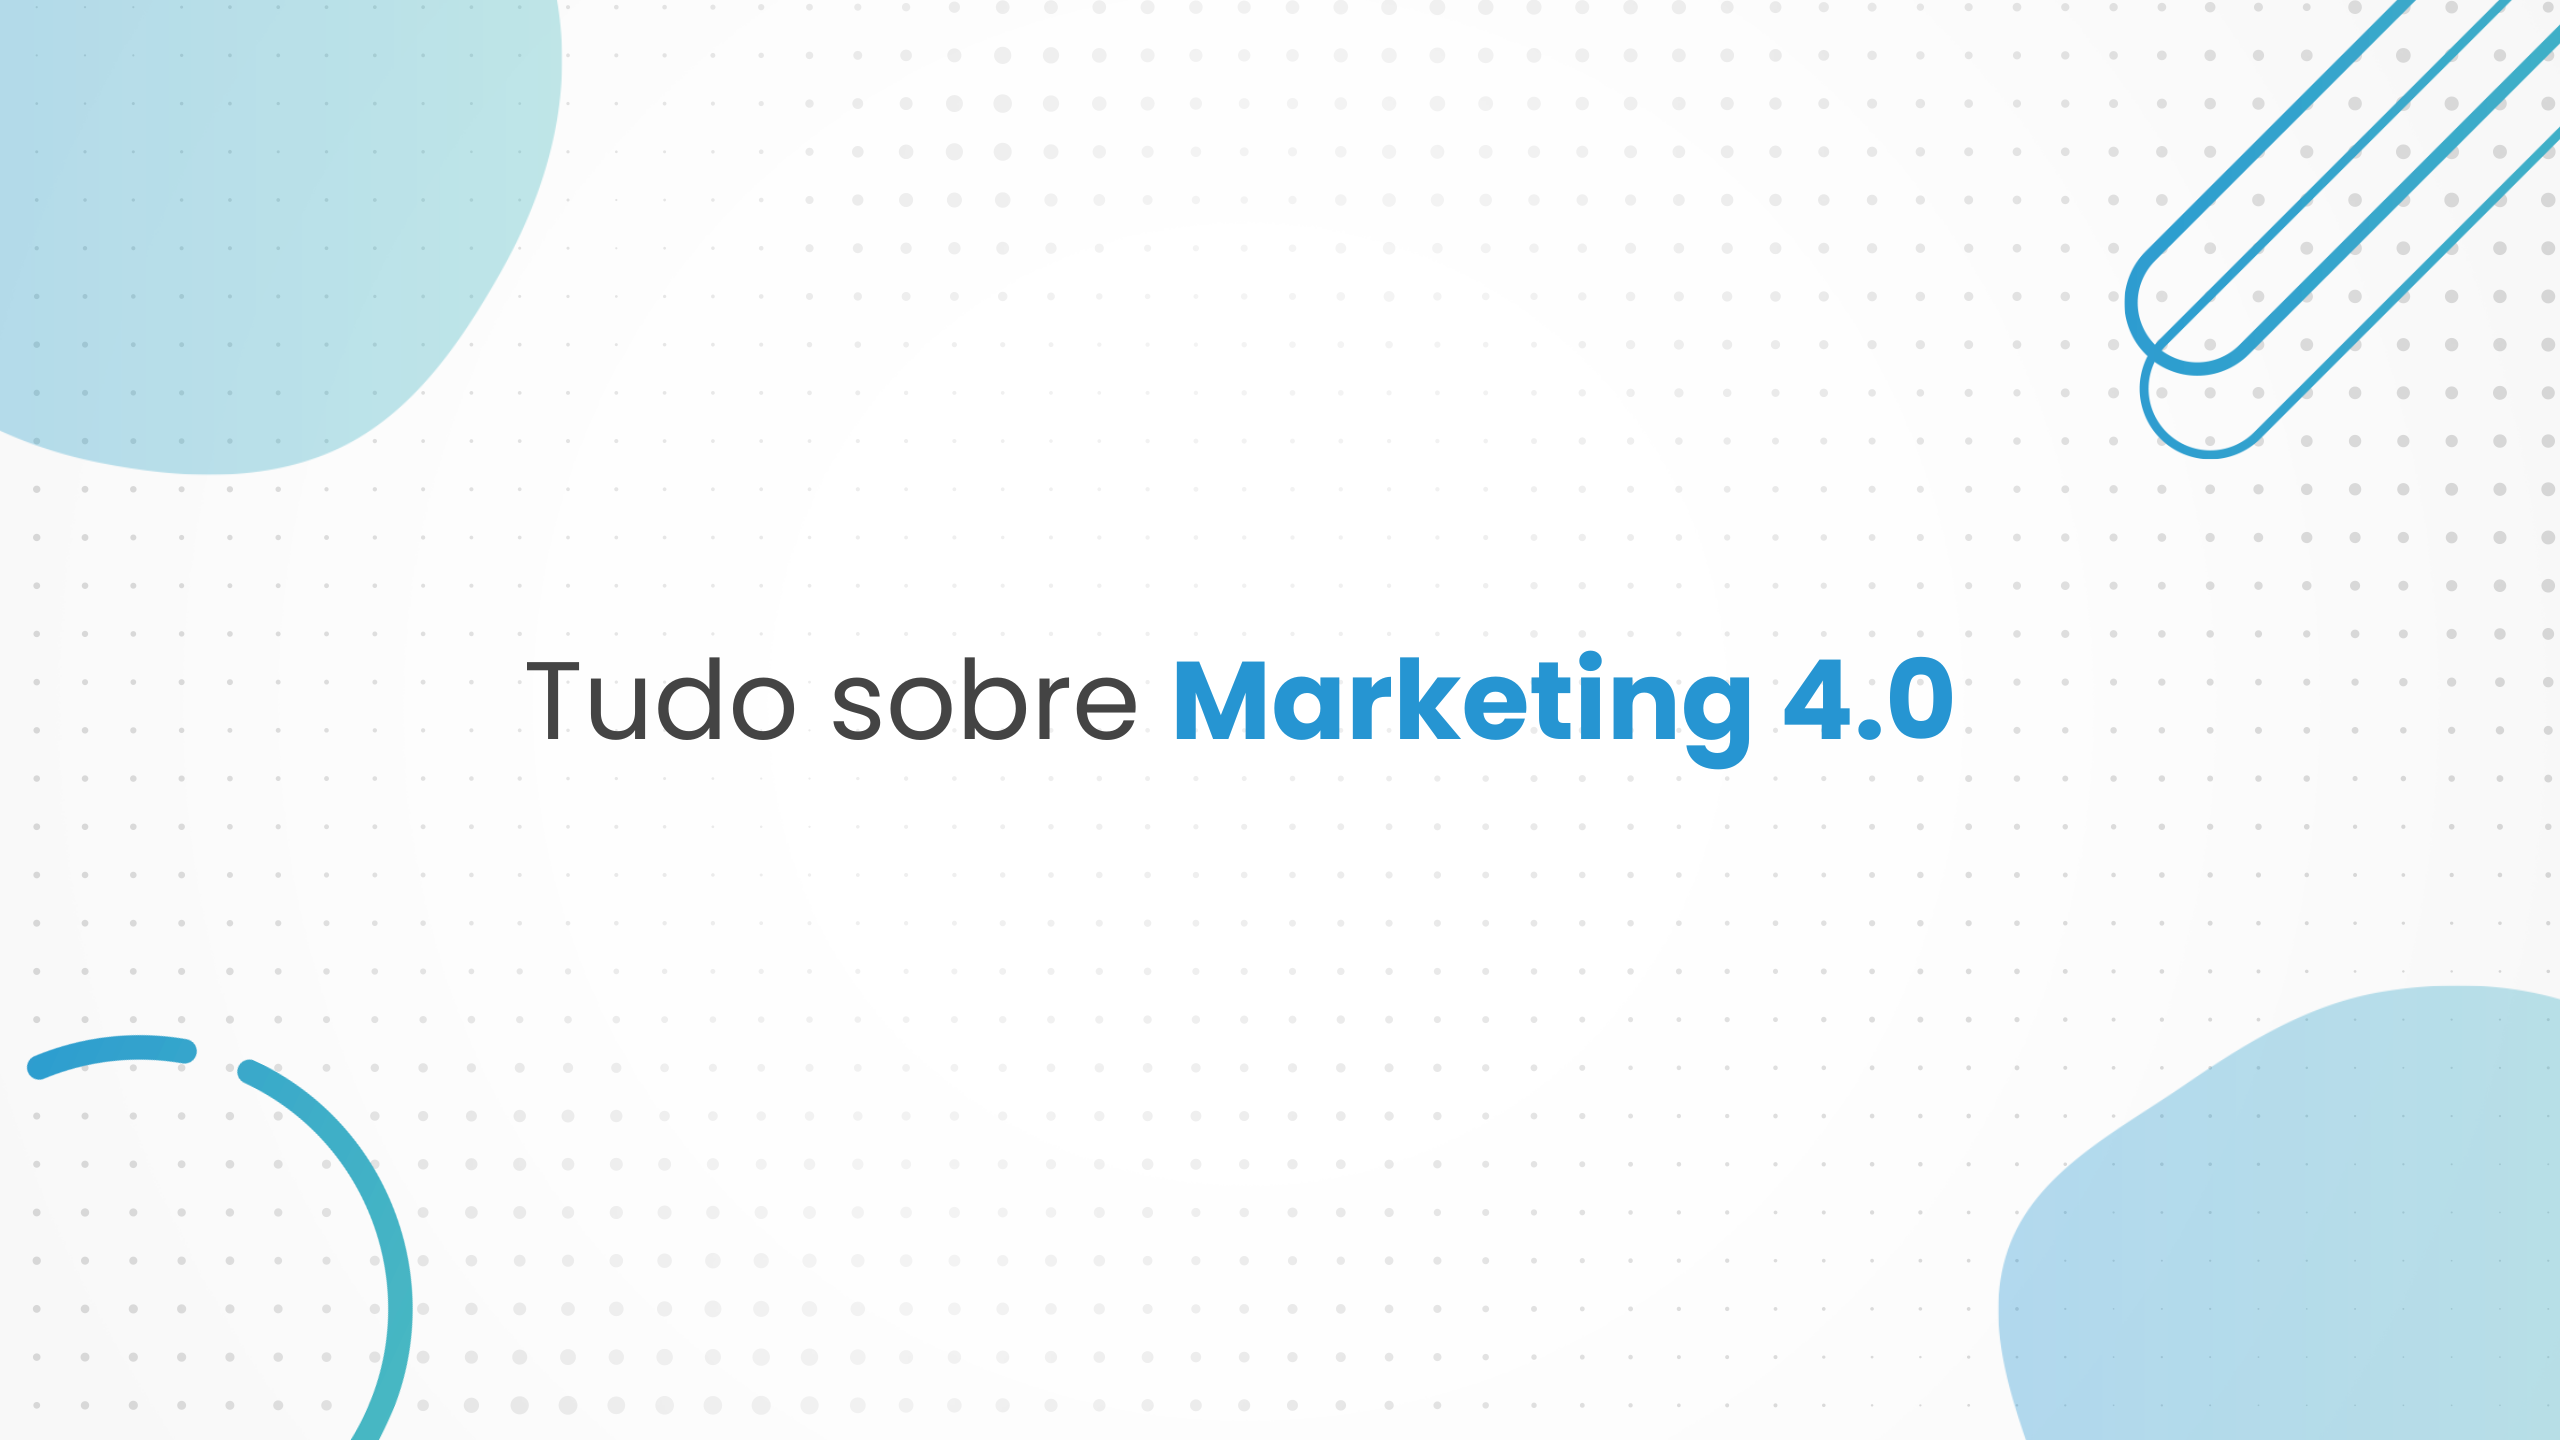 marketing 4.0